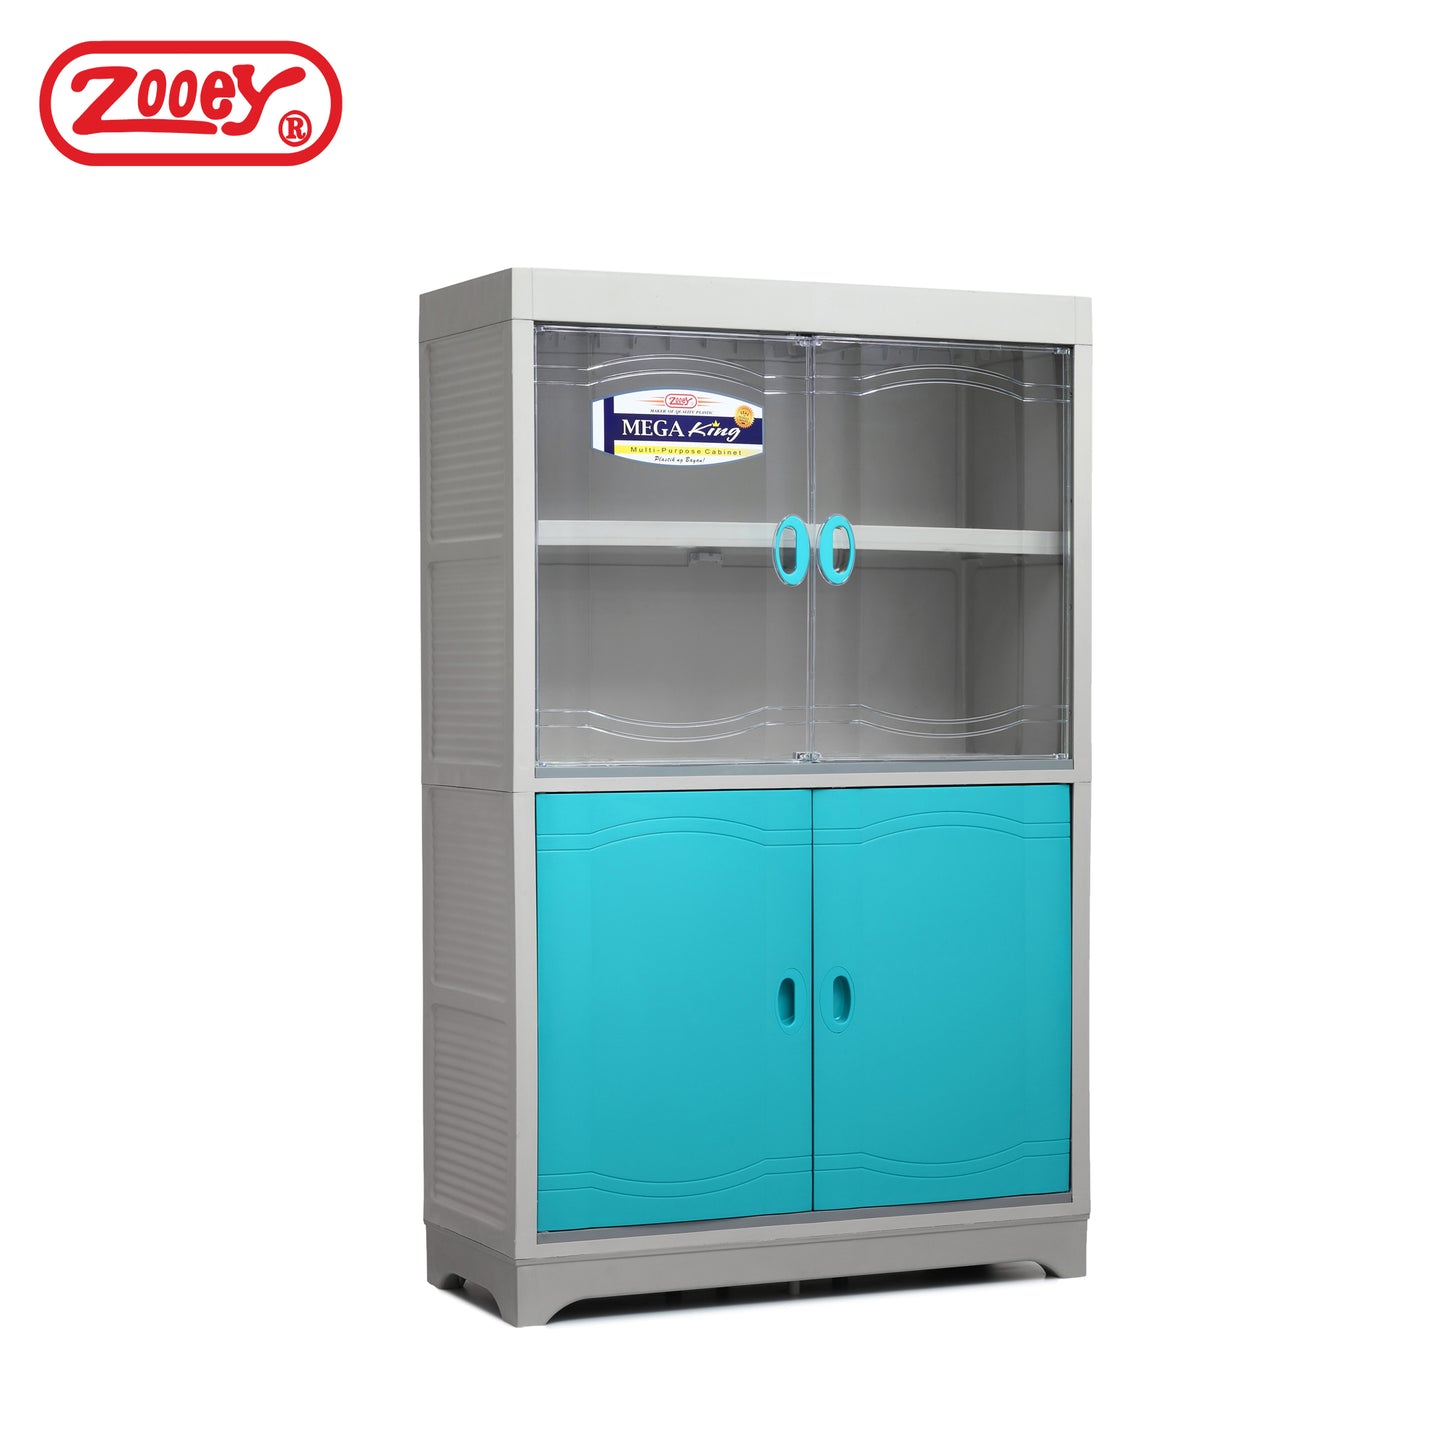 #922-2L Storage & Display Cabinet